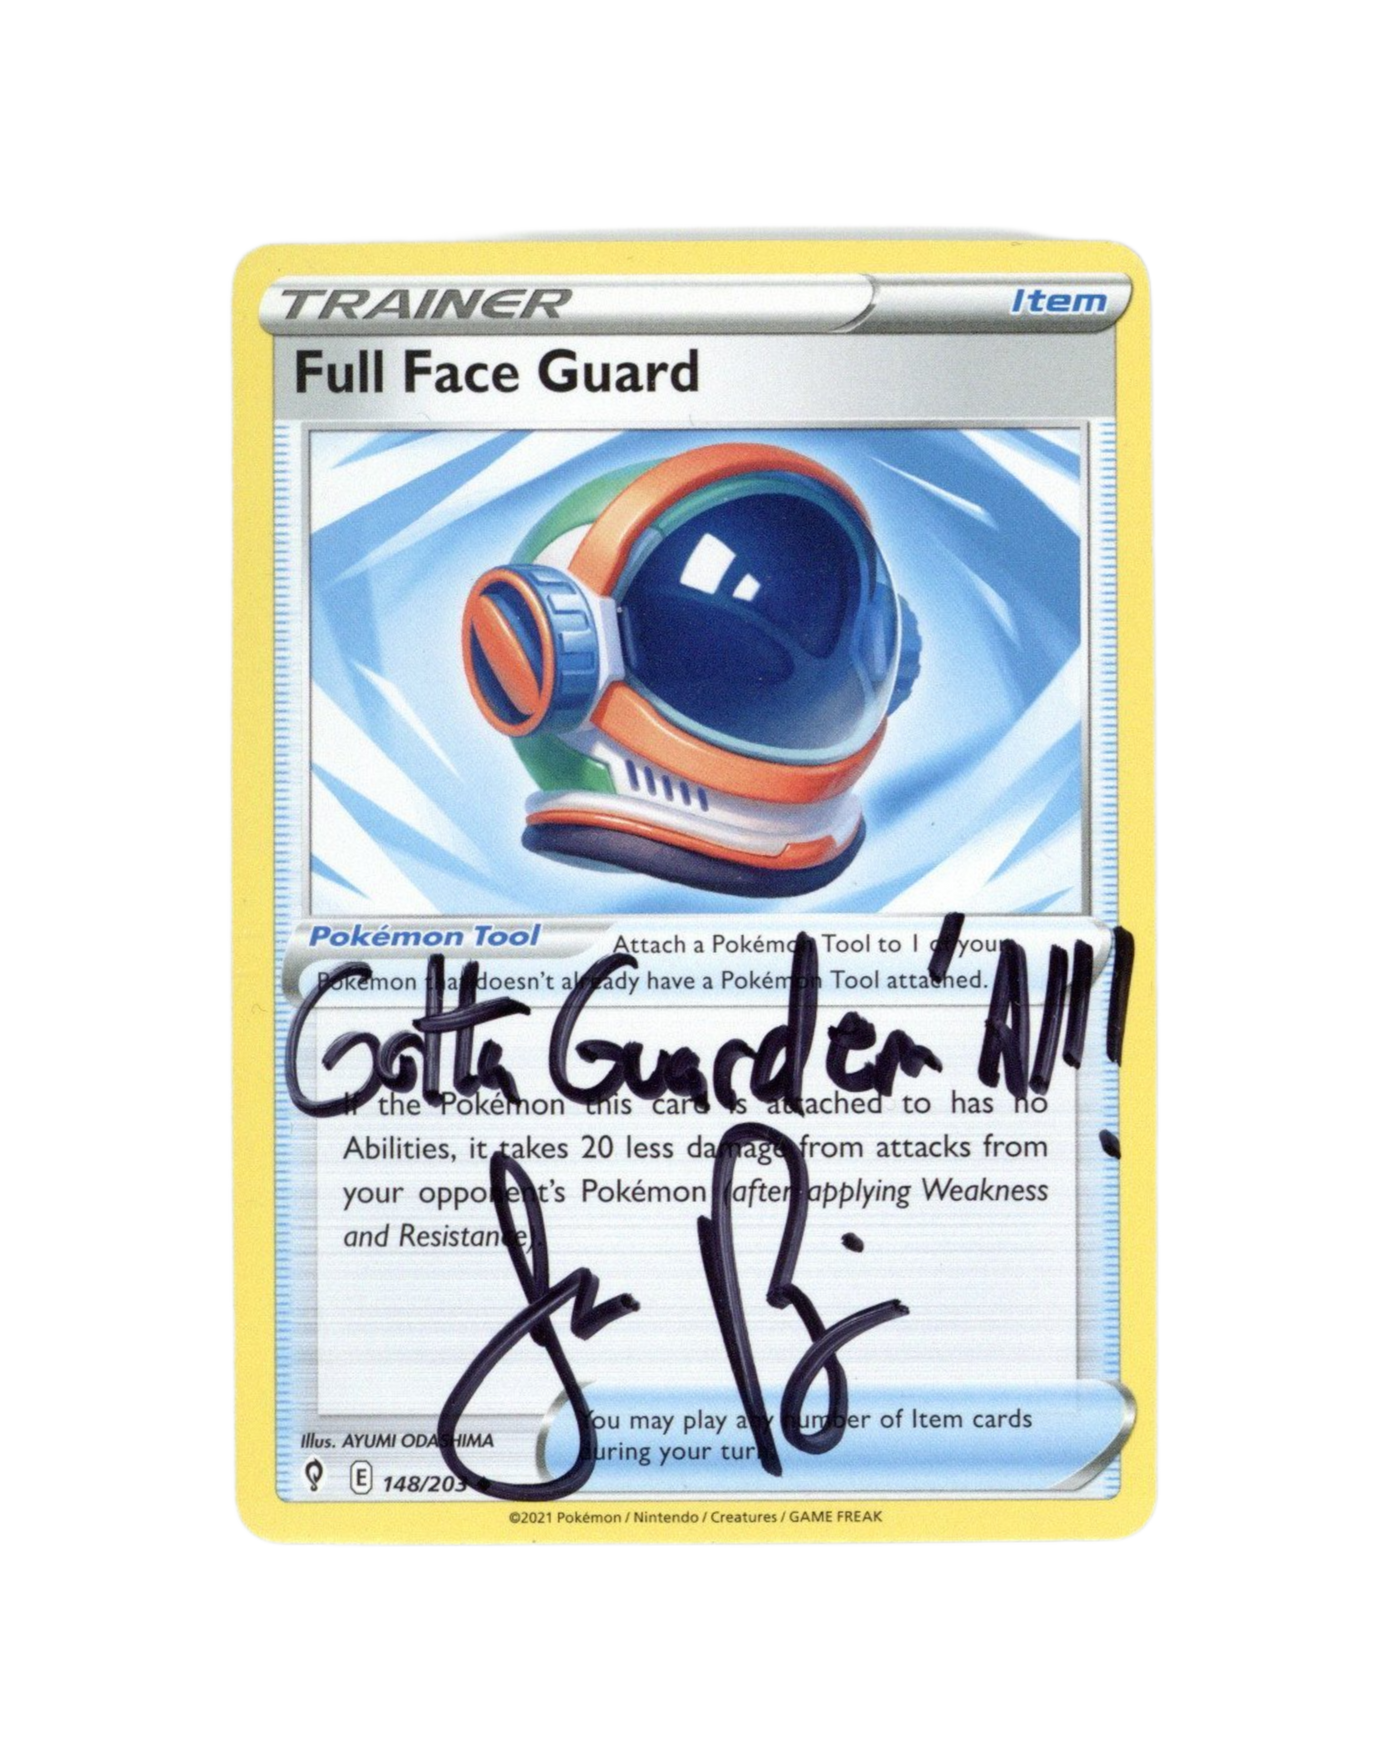 Jason Paige Signed Pokemon Trainer Trading Card - Autographed Zobie COA